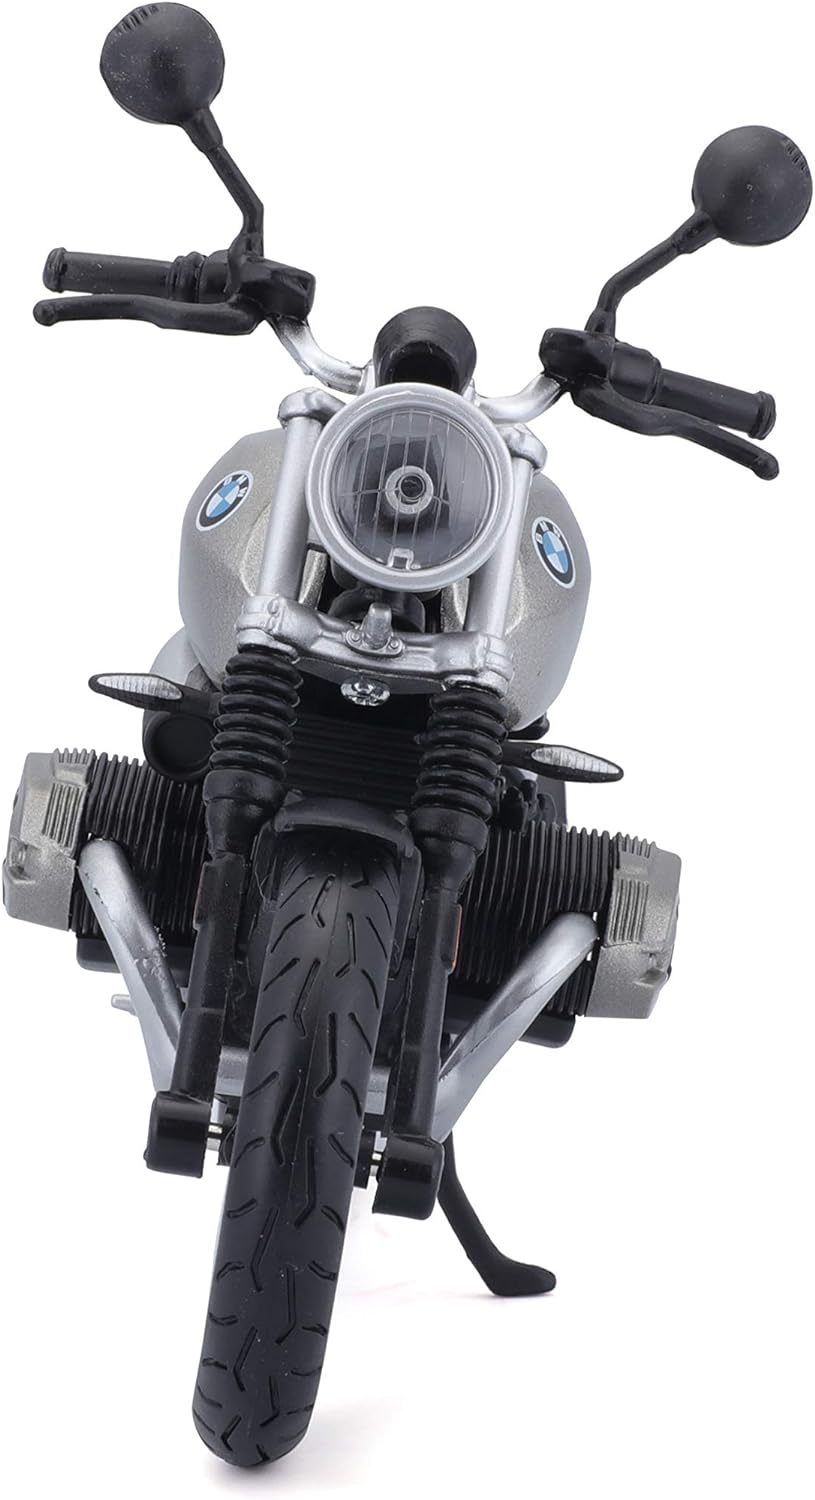 10-32701 - Bburago Maisto - 1:12 Moto con cavalletto - BMW R nineT Scrambler